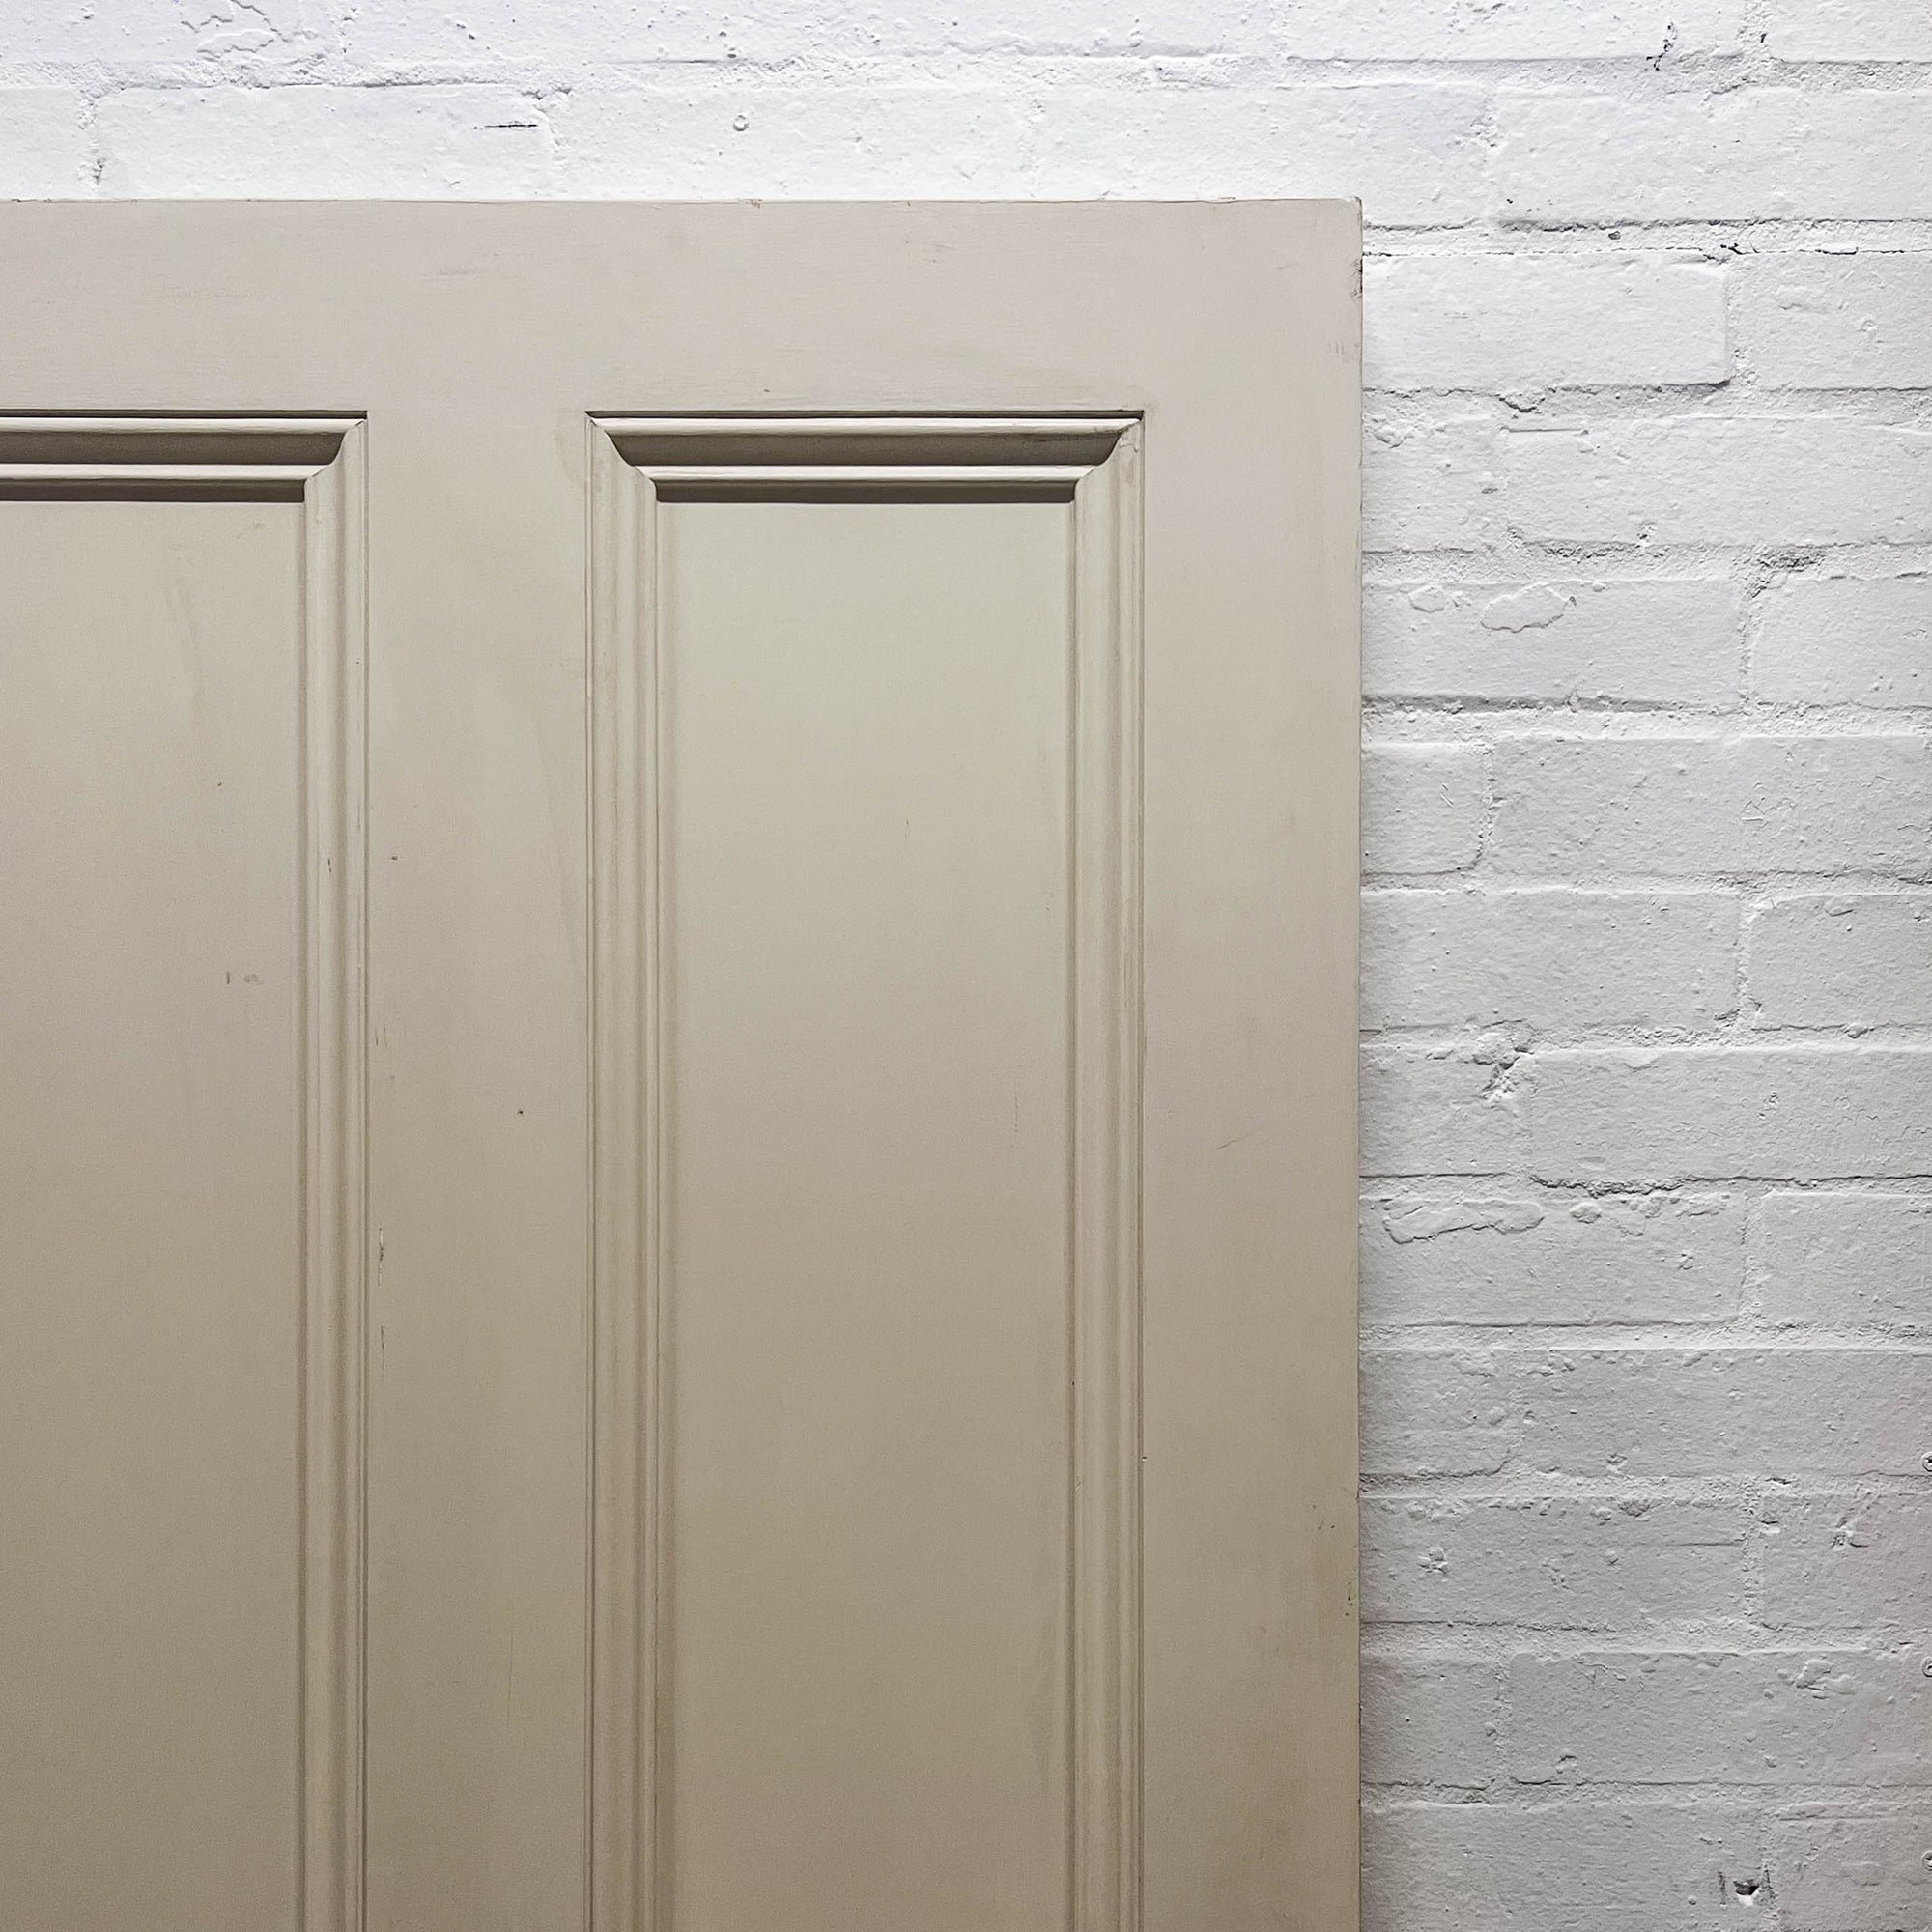 Victorian 4 Panel Antique Door - 201.5cm x 81cm | The Architectural Forum